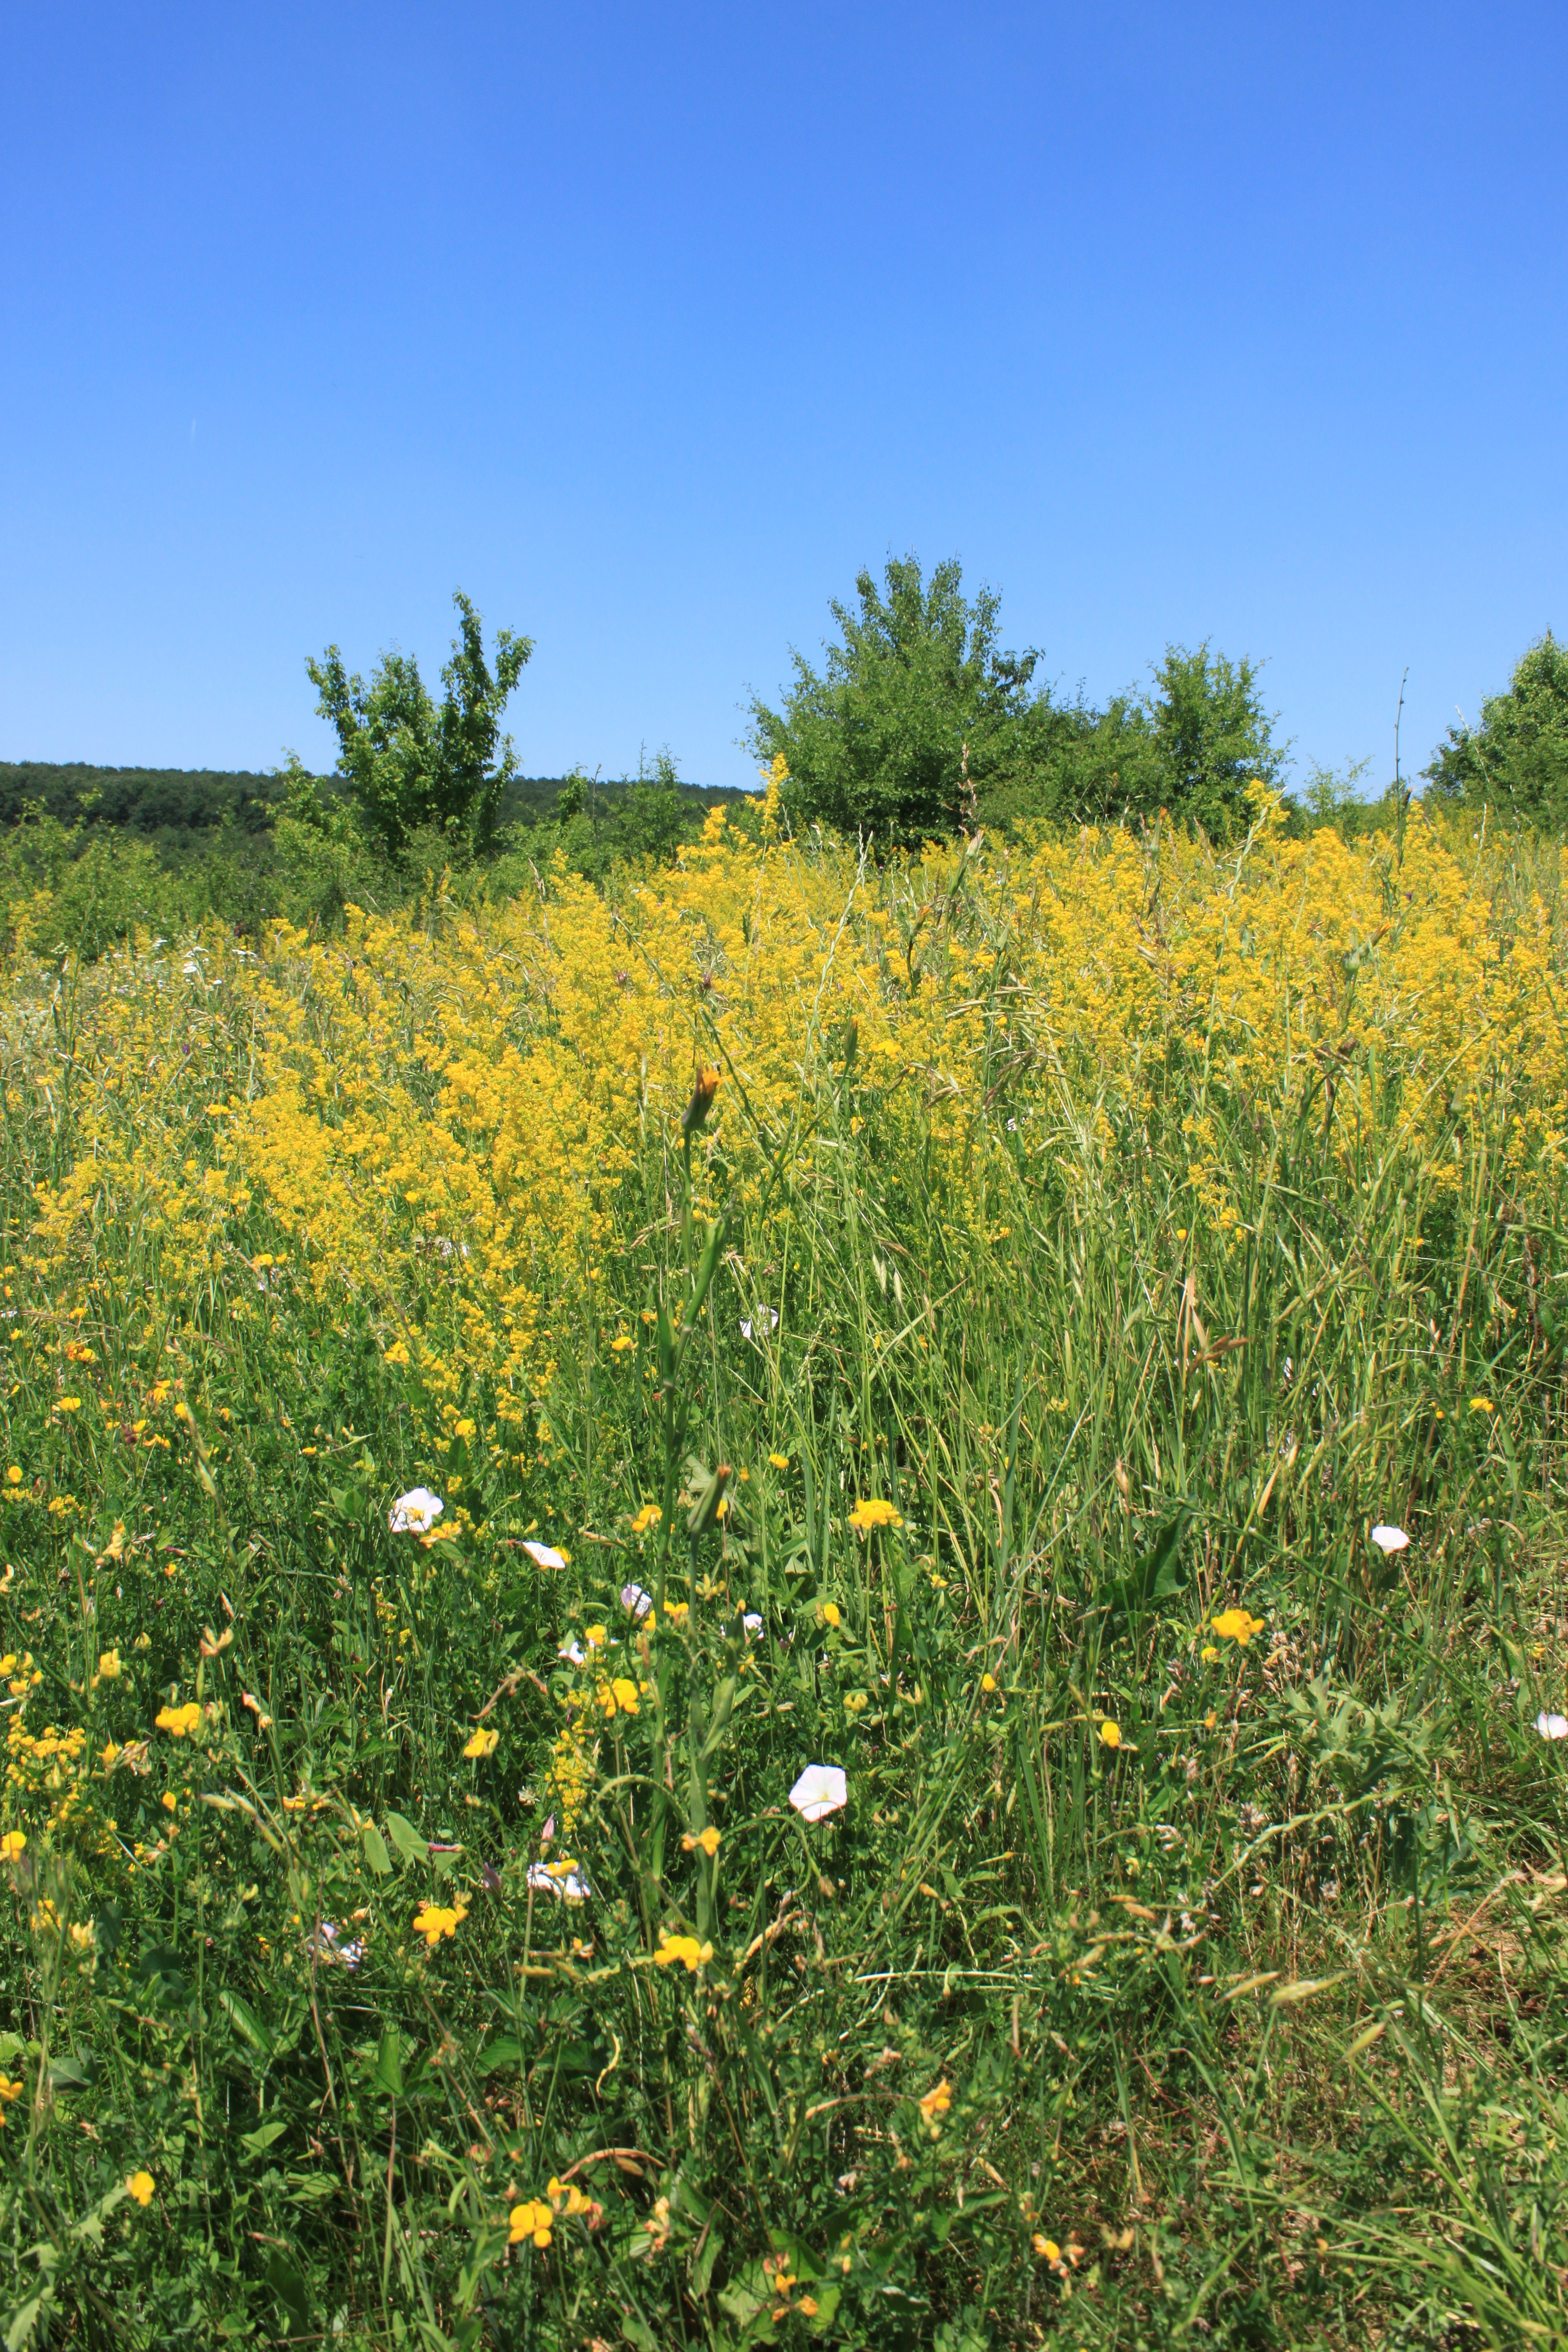 Как называется поле травы. Желтая трава. Желтое растение на полях. Жёлтая трава на полях. Травка с желтыми цветами.